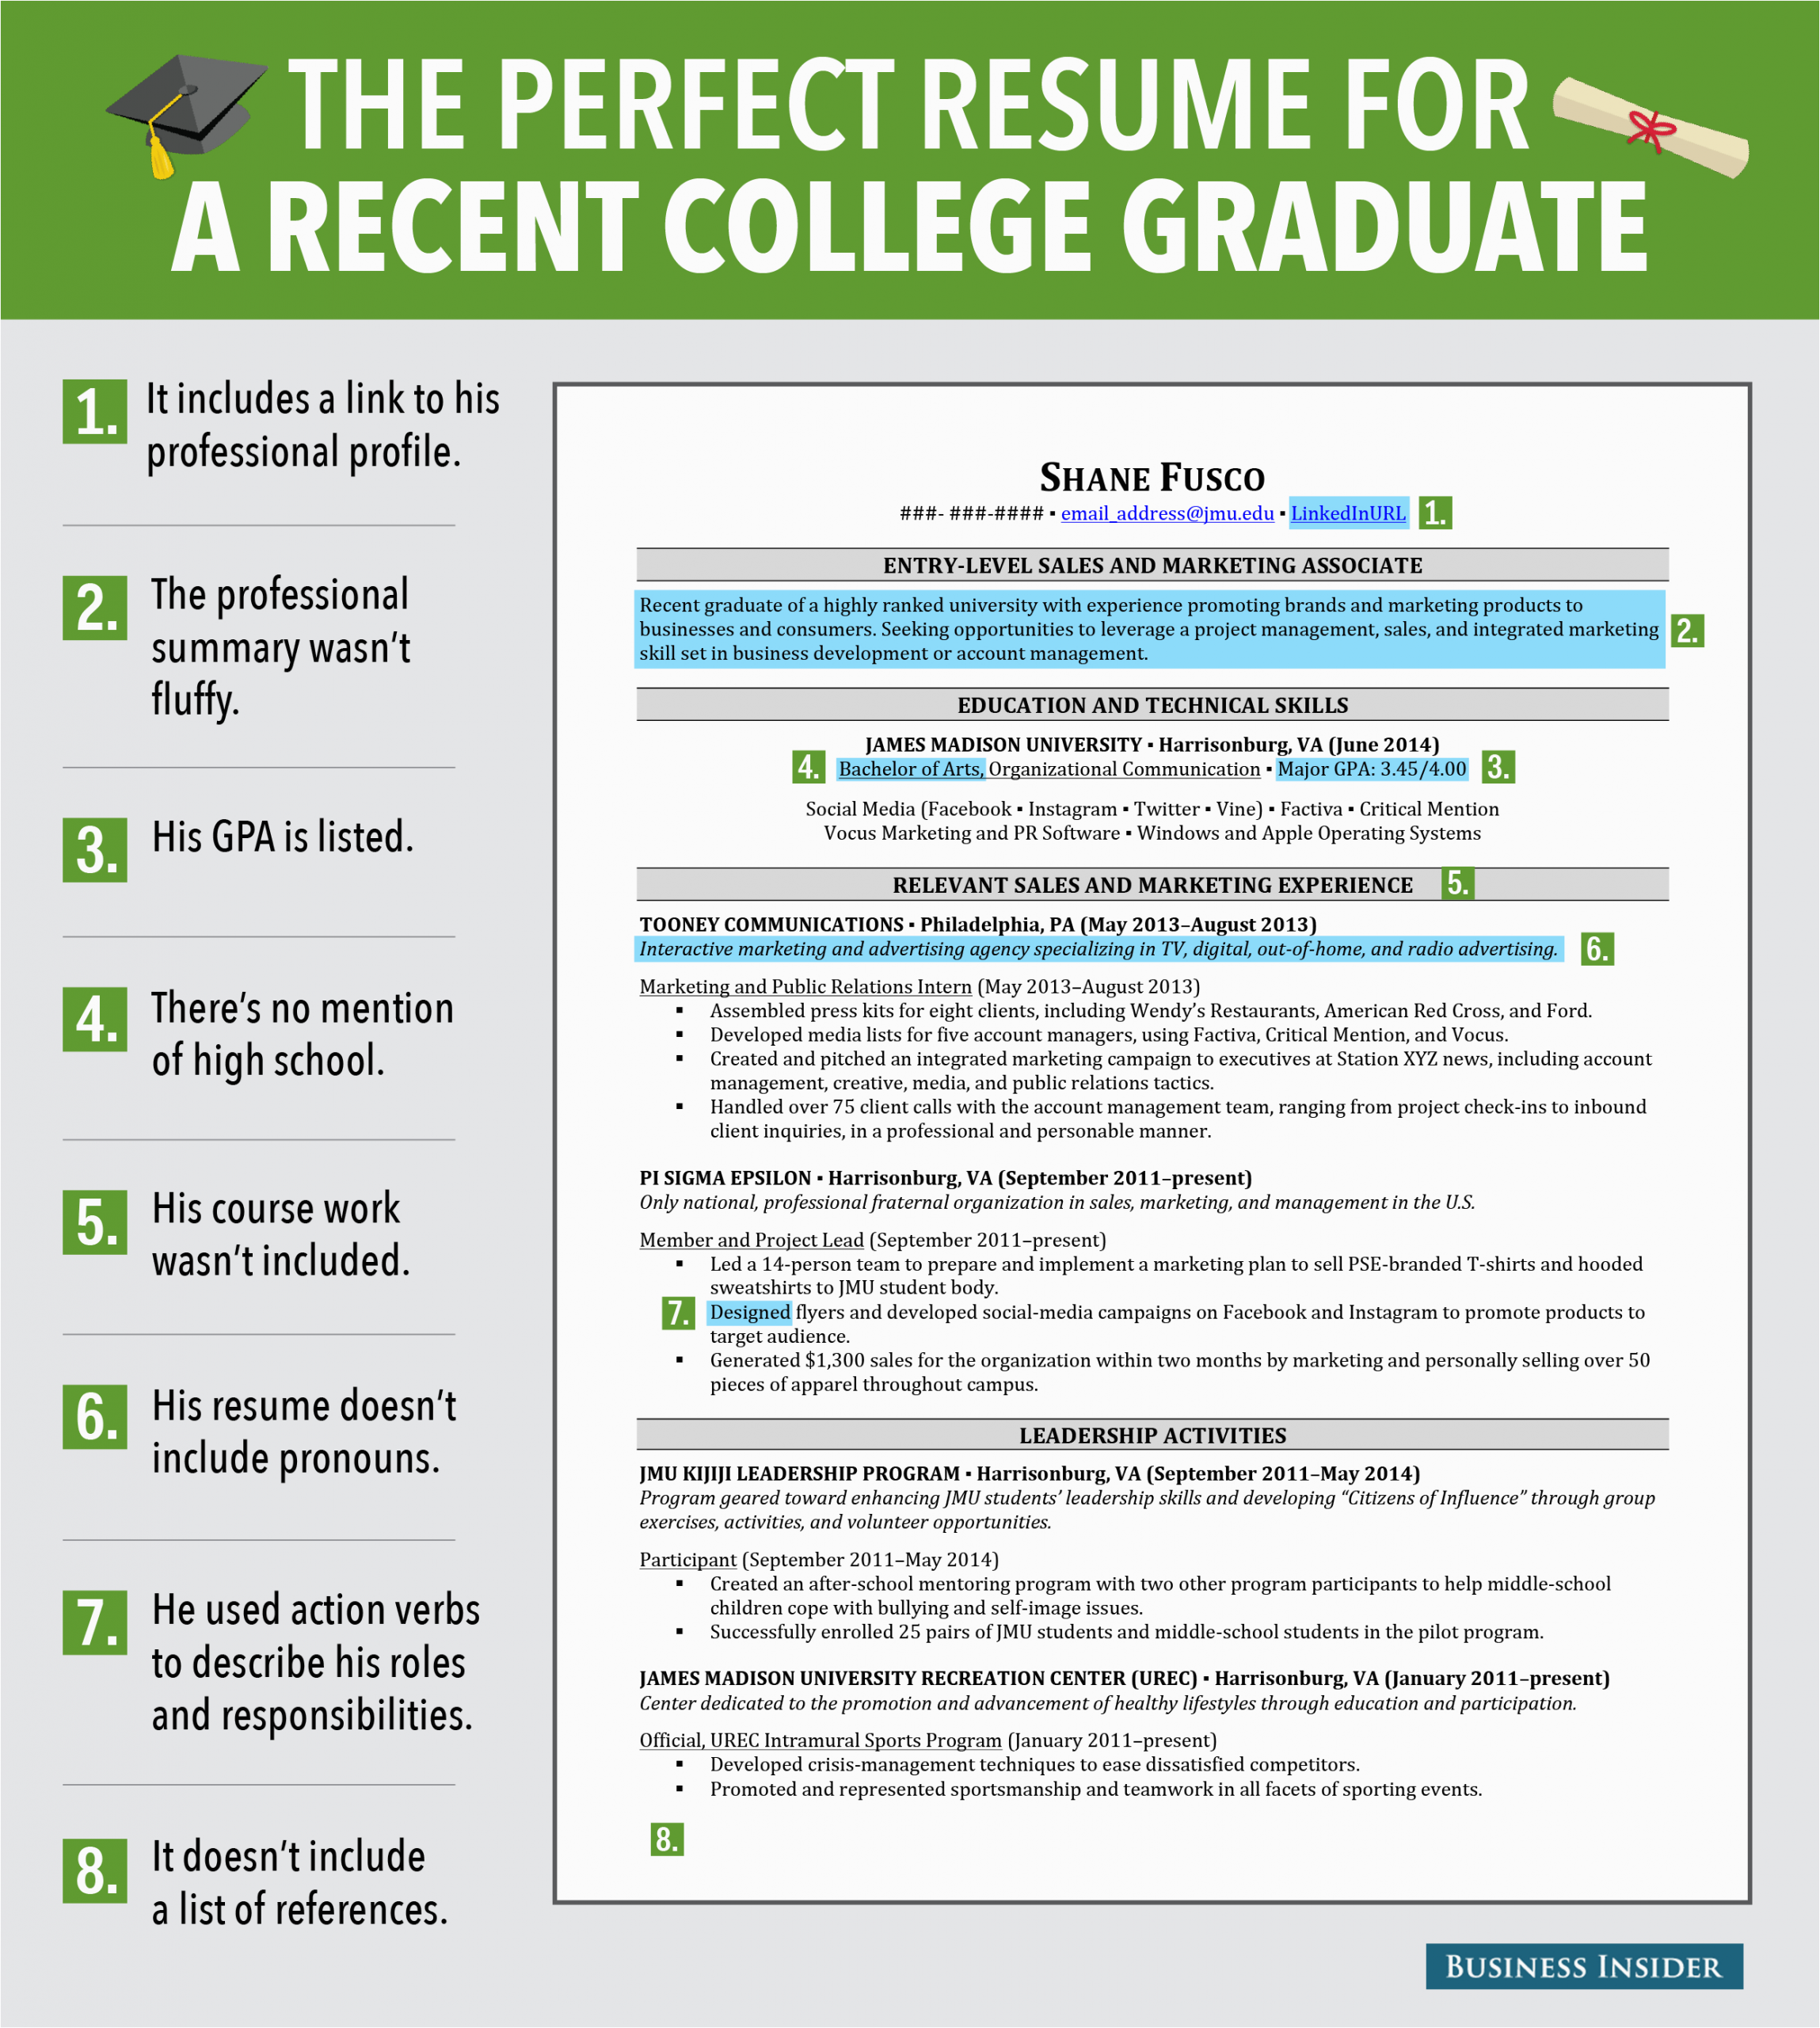 excellent resume for recent grad 2014 7